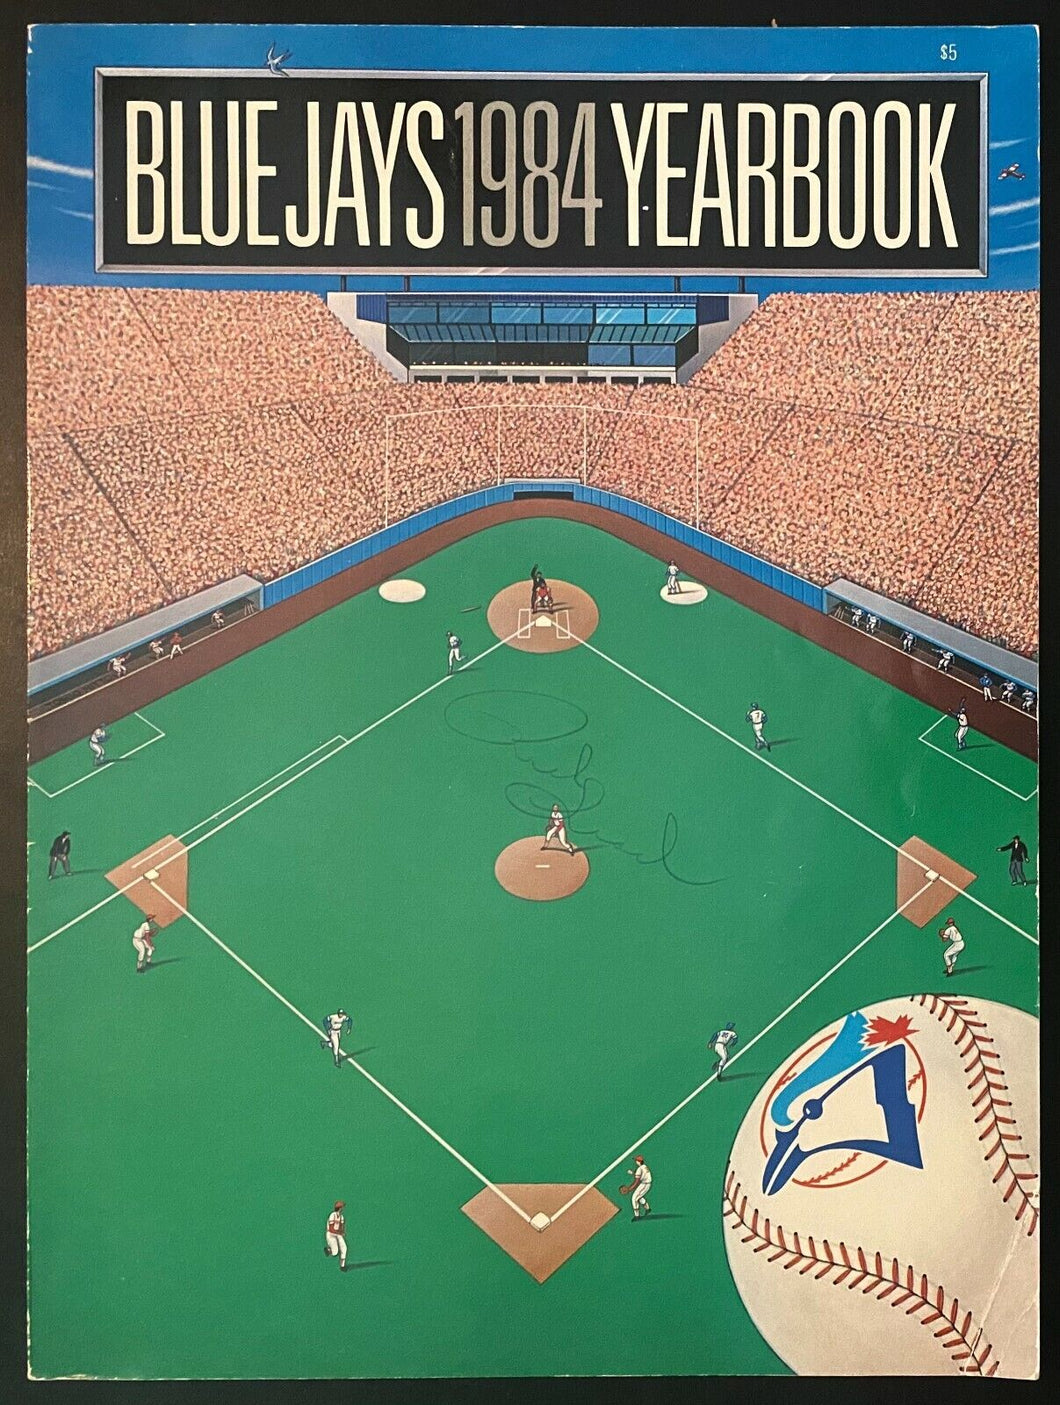 1984 Signed Vintage MLB Baseball Toronto Blue Jays Autographed Yearbook